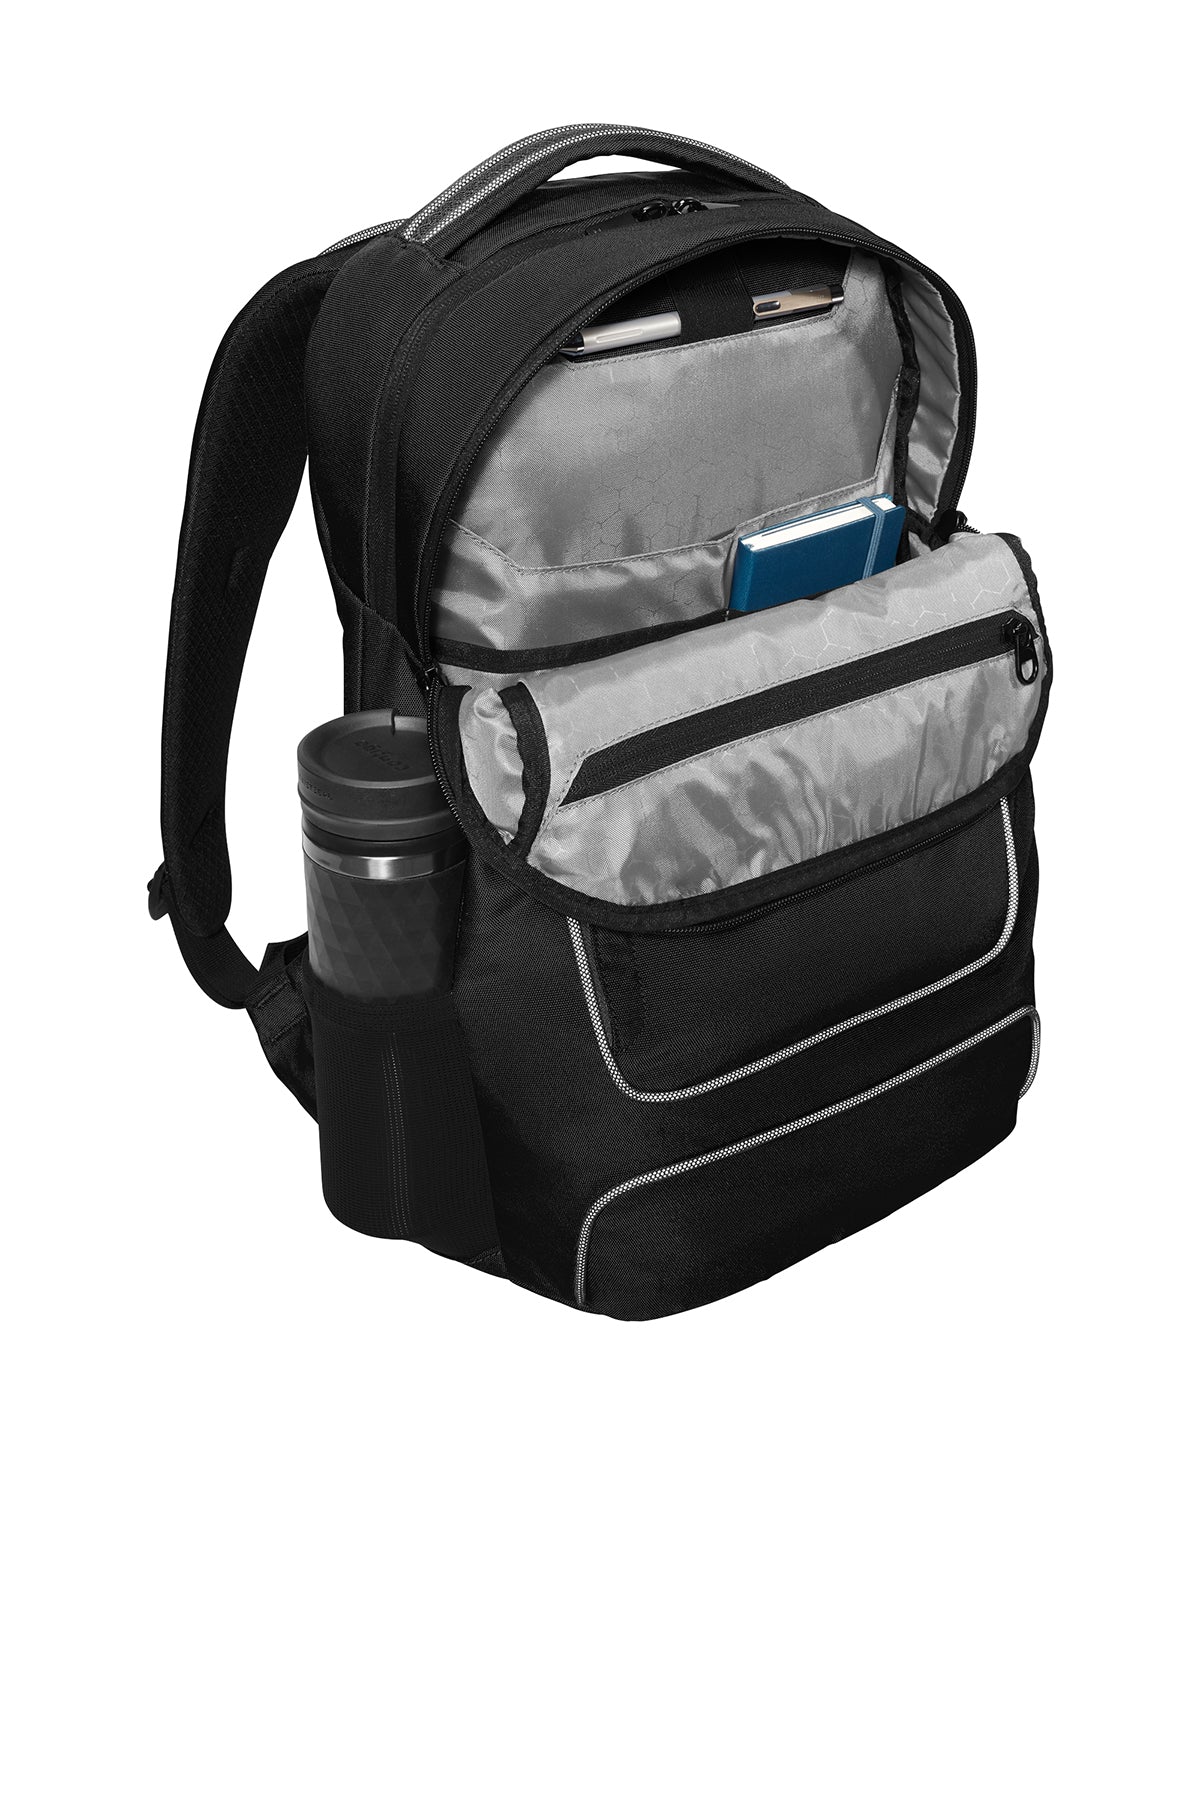 OGIO Range Customzied Backpacks, Black